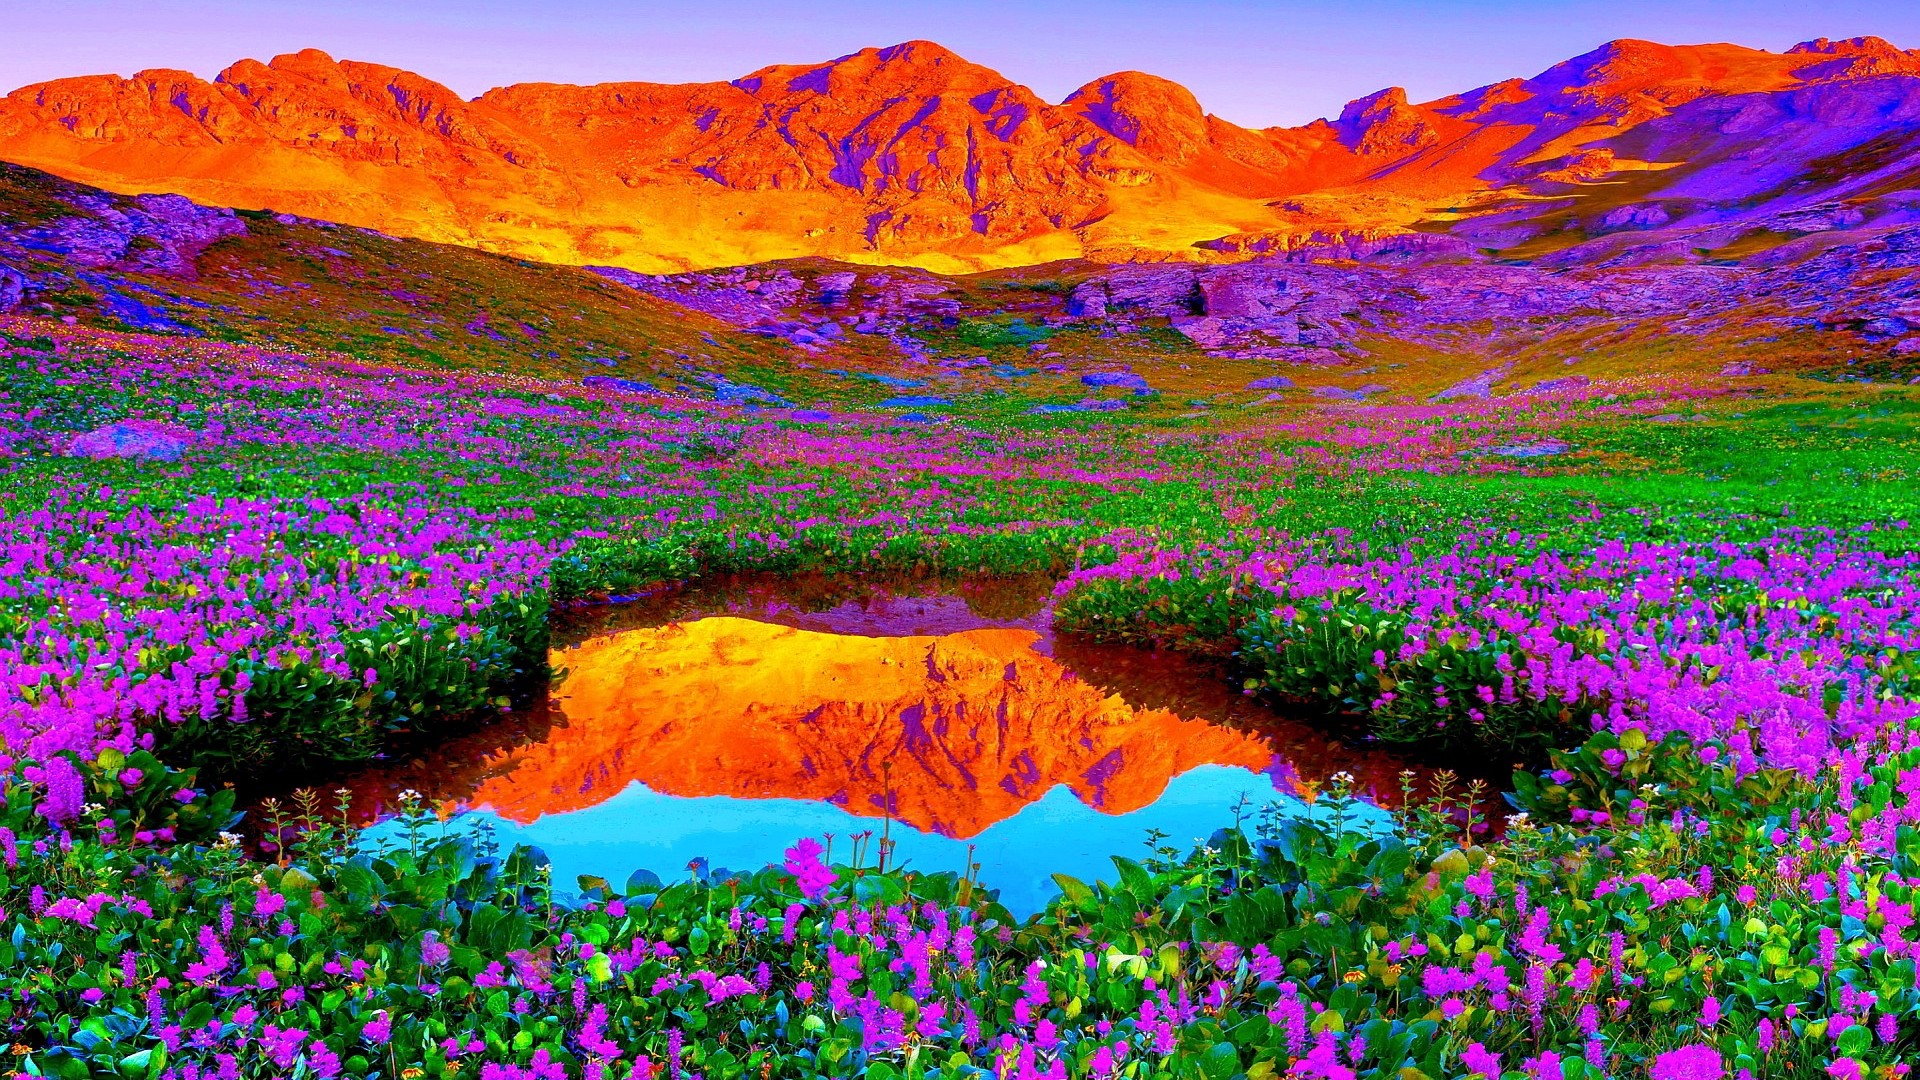 nature wallpaper hd download,natural landscape,nature,lavender,purple,flower